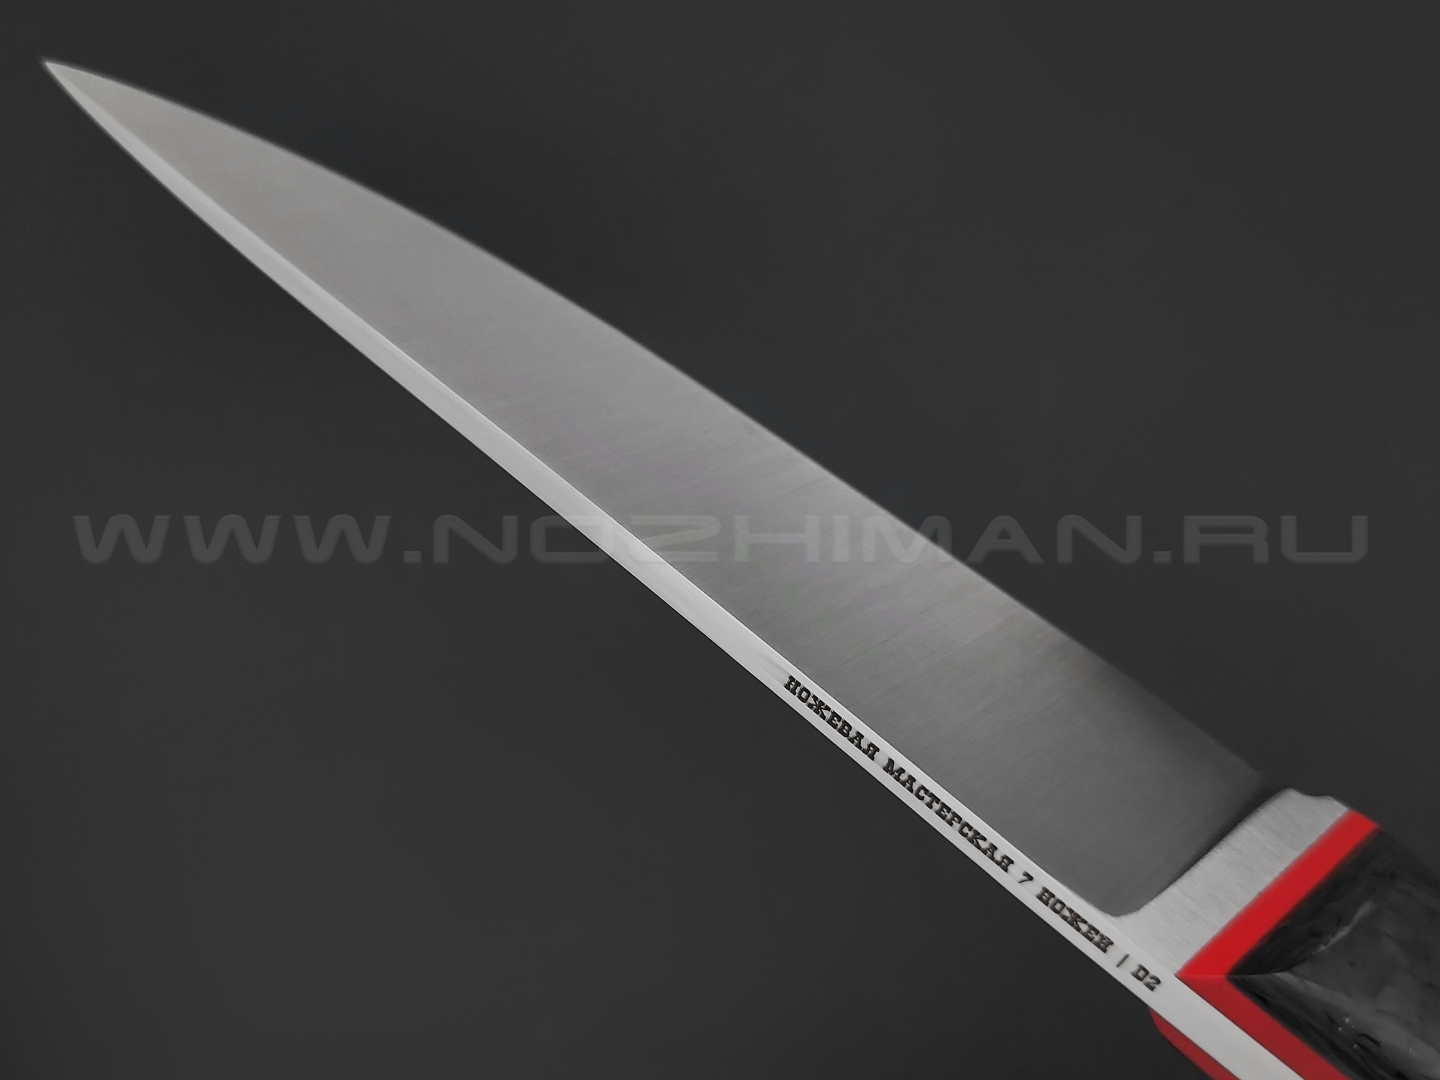 7 ножей нож Бритва сталь D2 satin, рукоять Carbon fiber, G10 red